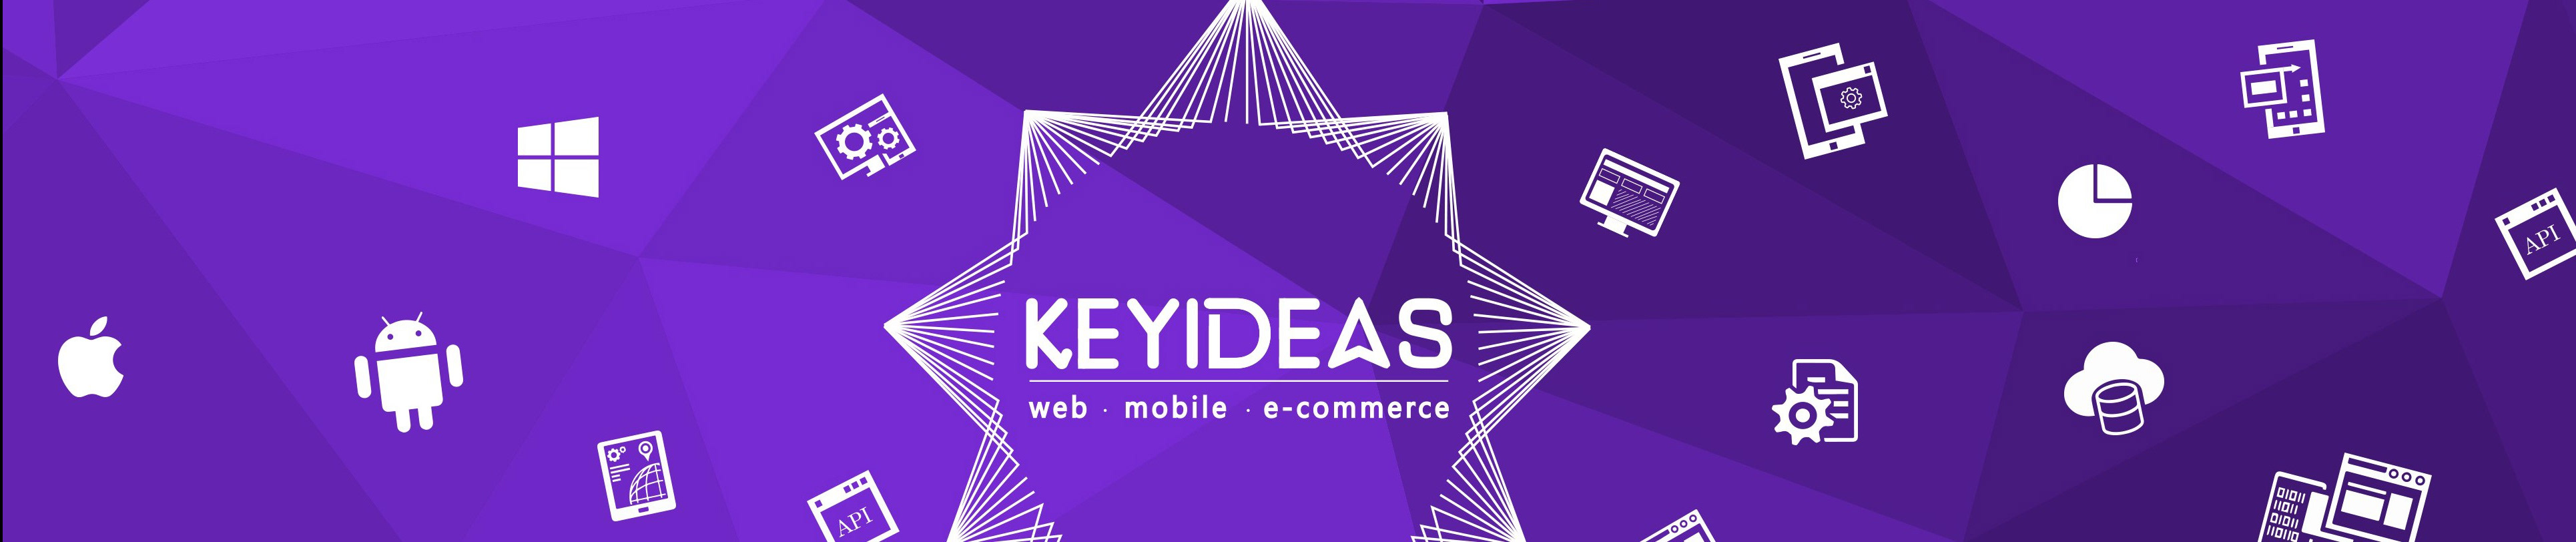 Keyideas - Web Design and Development Company's profile banner